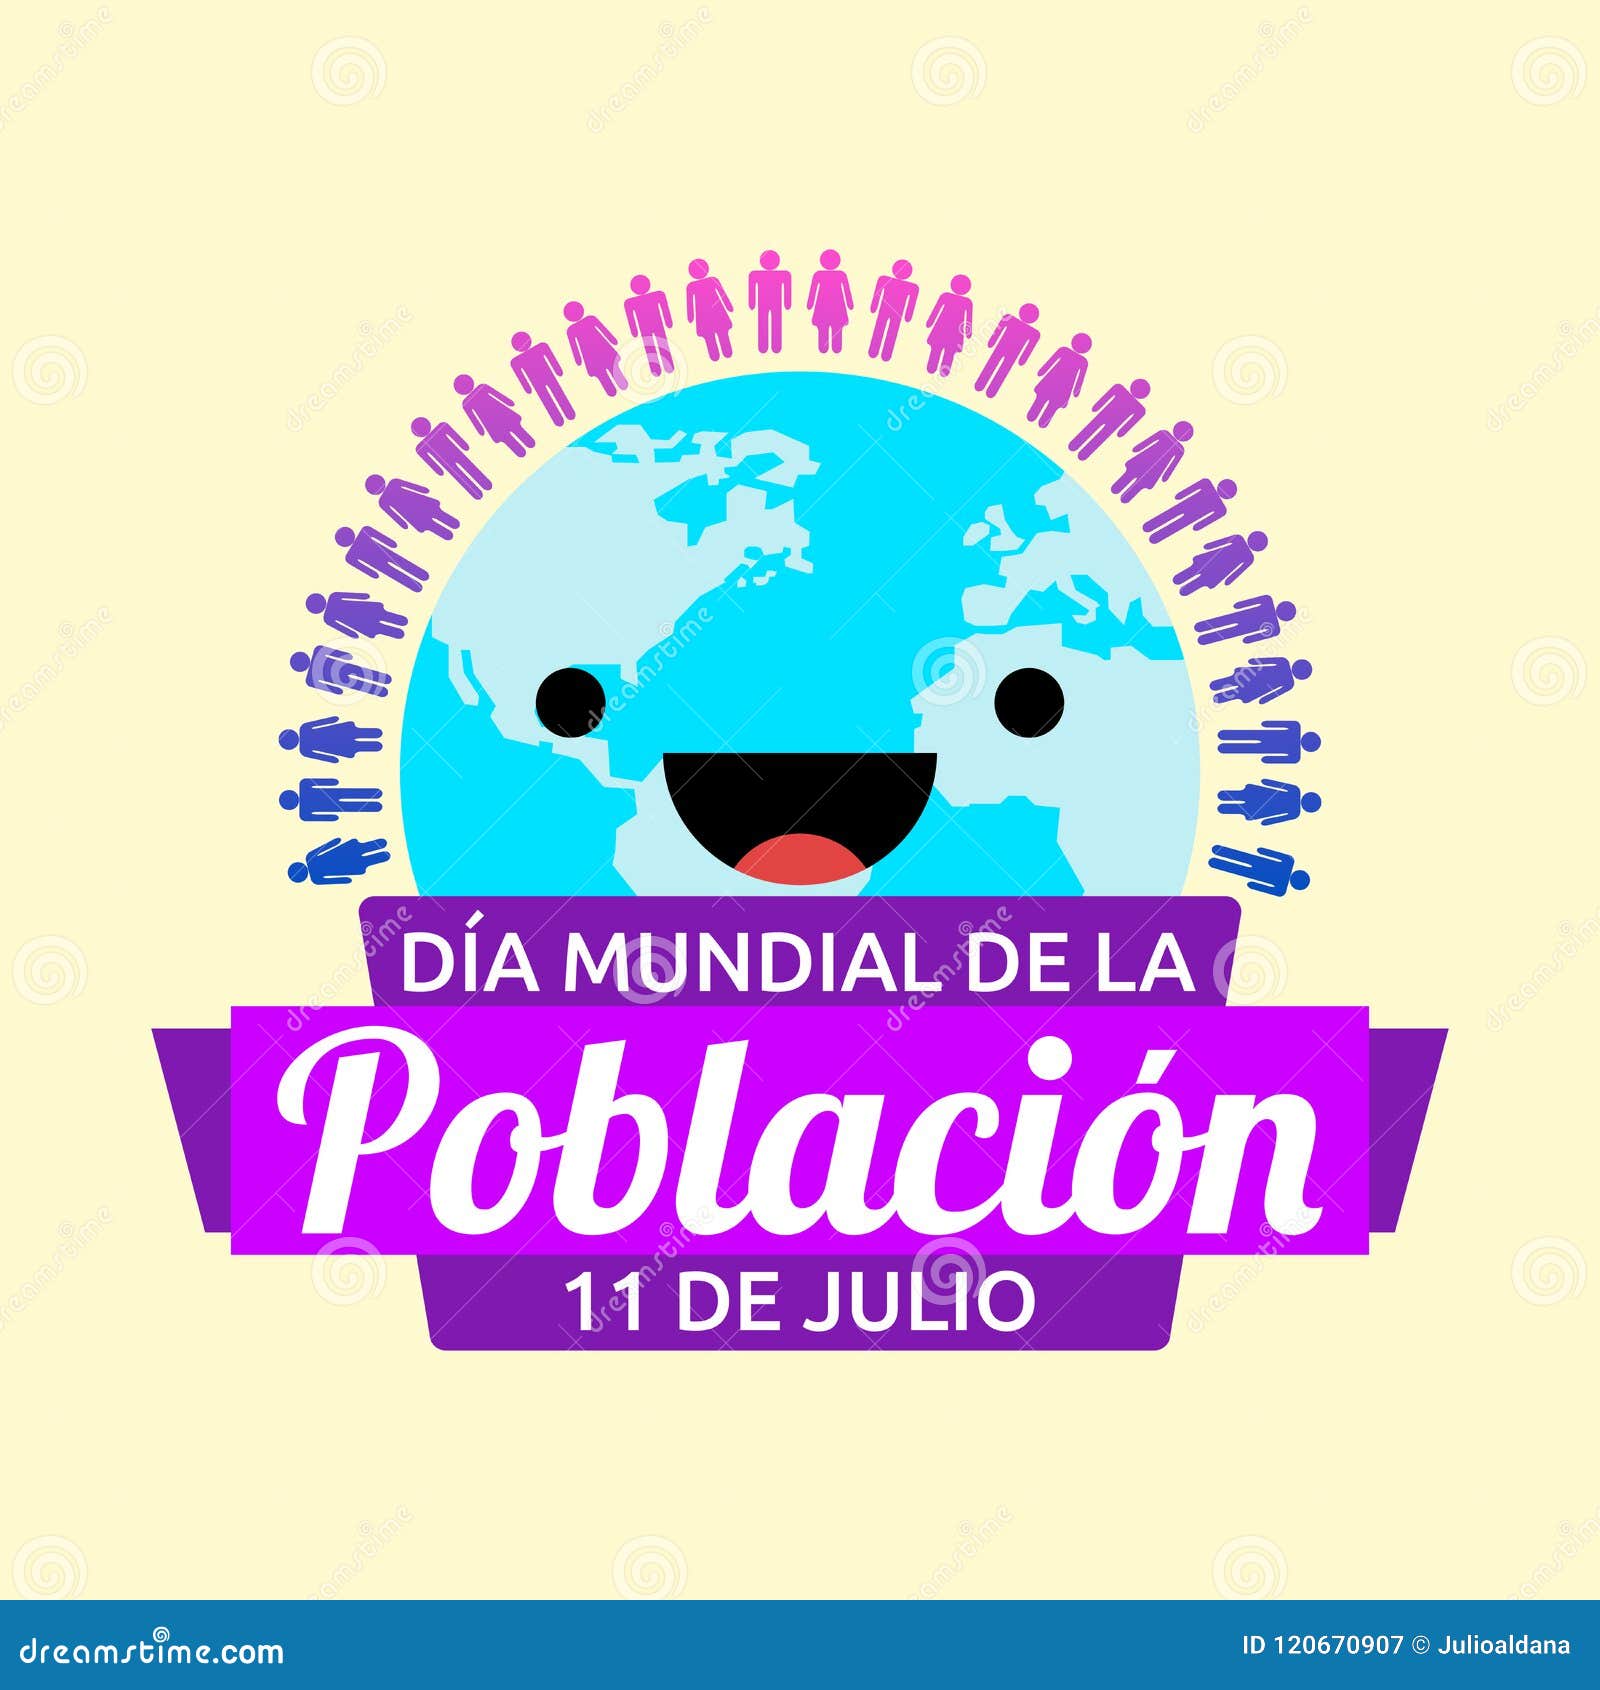 dia mundial de la poblacion, world population day spanish text